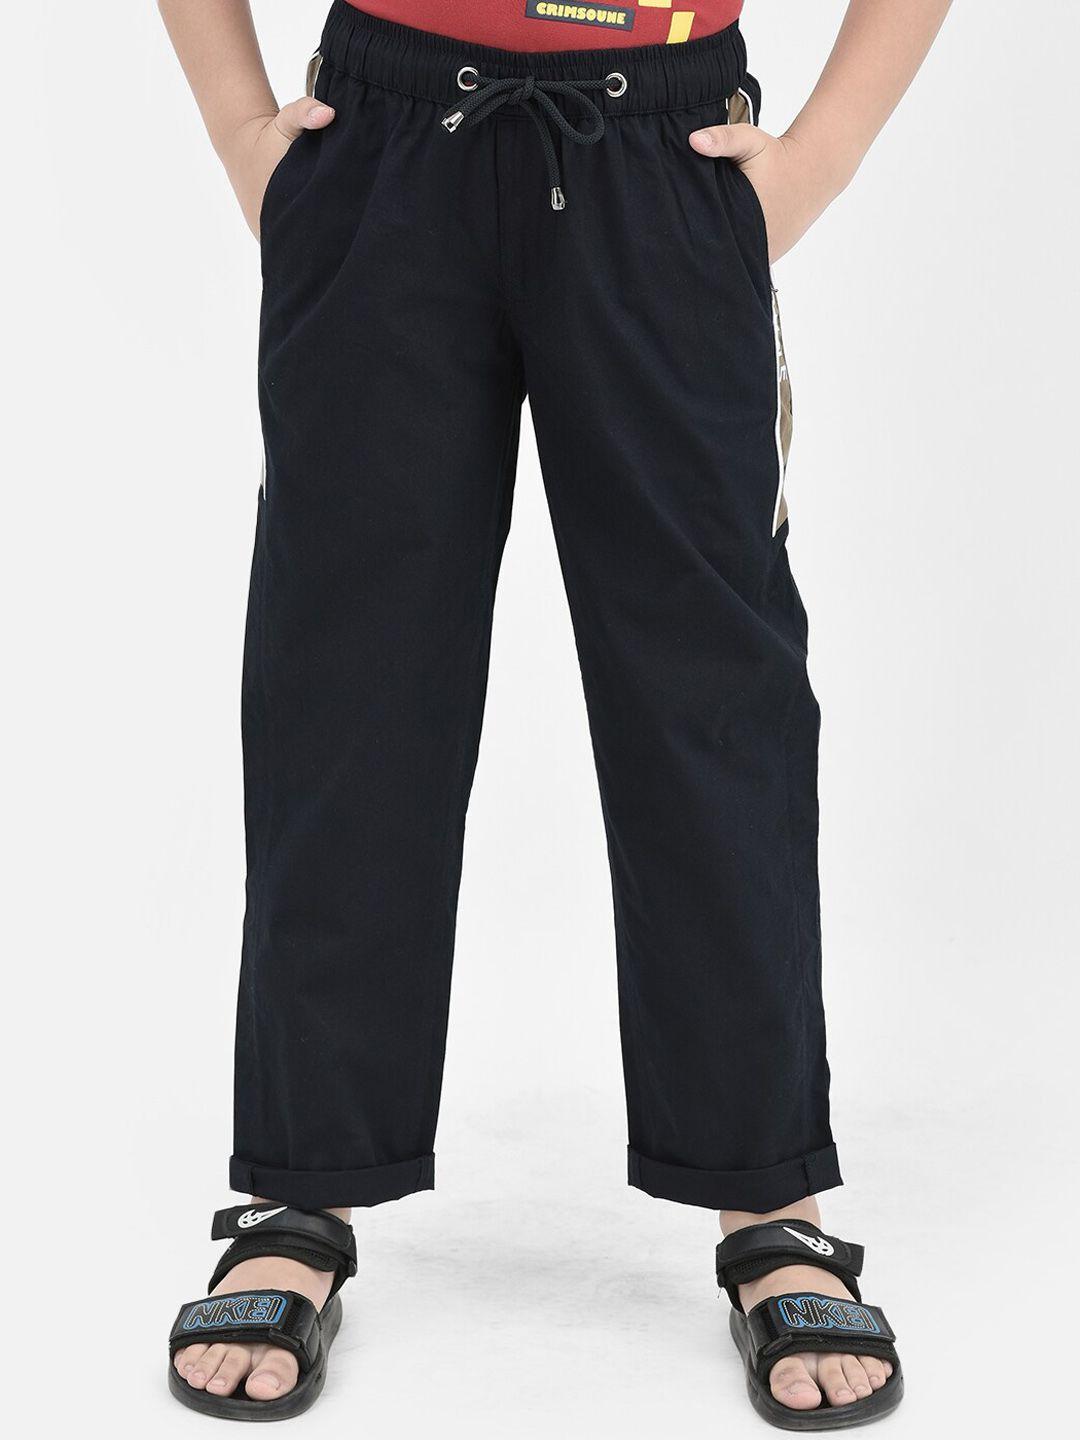 crimsoune-club-boys-side-printed-pure-cotton-track-pants